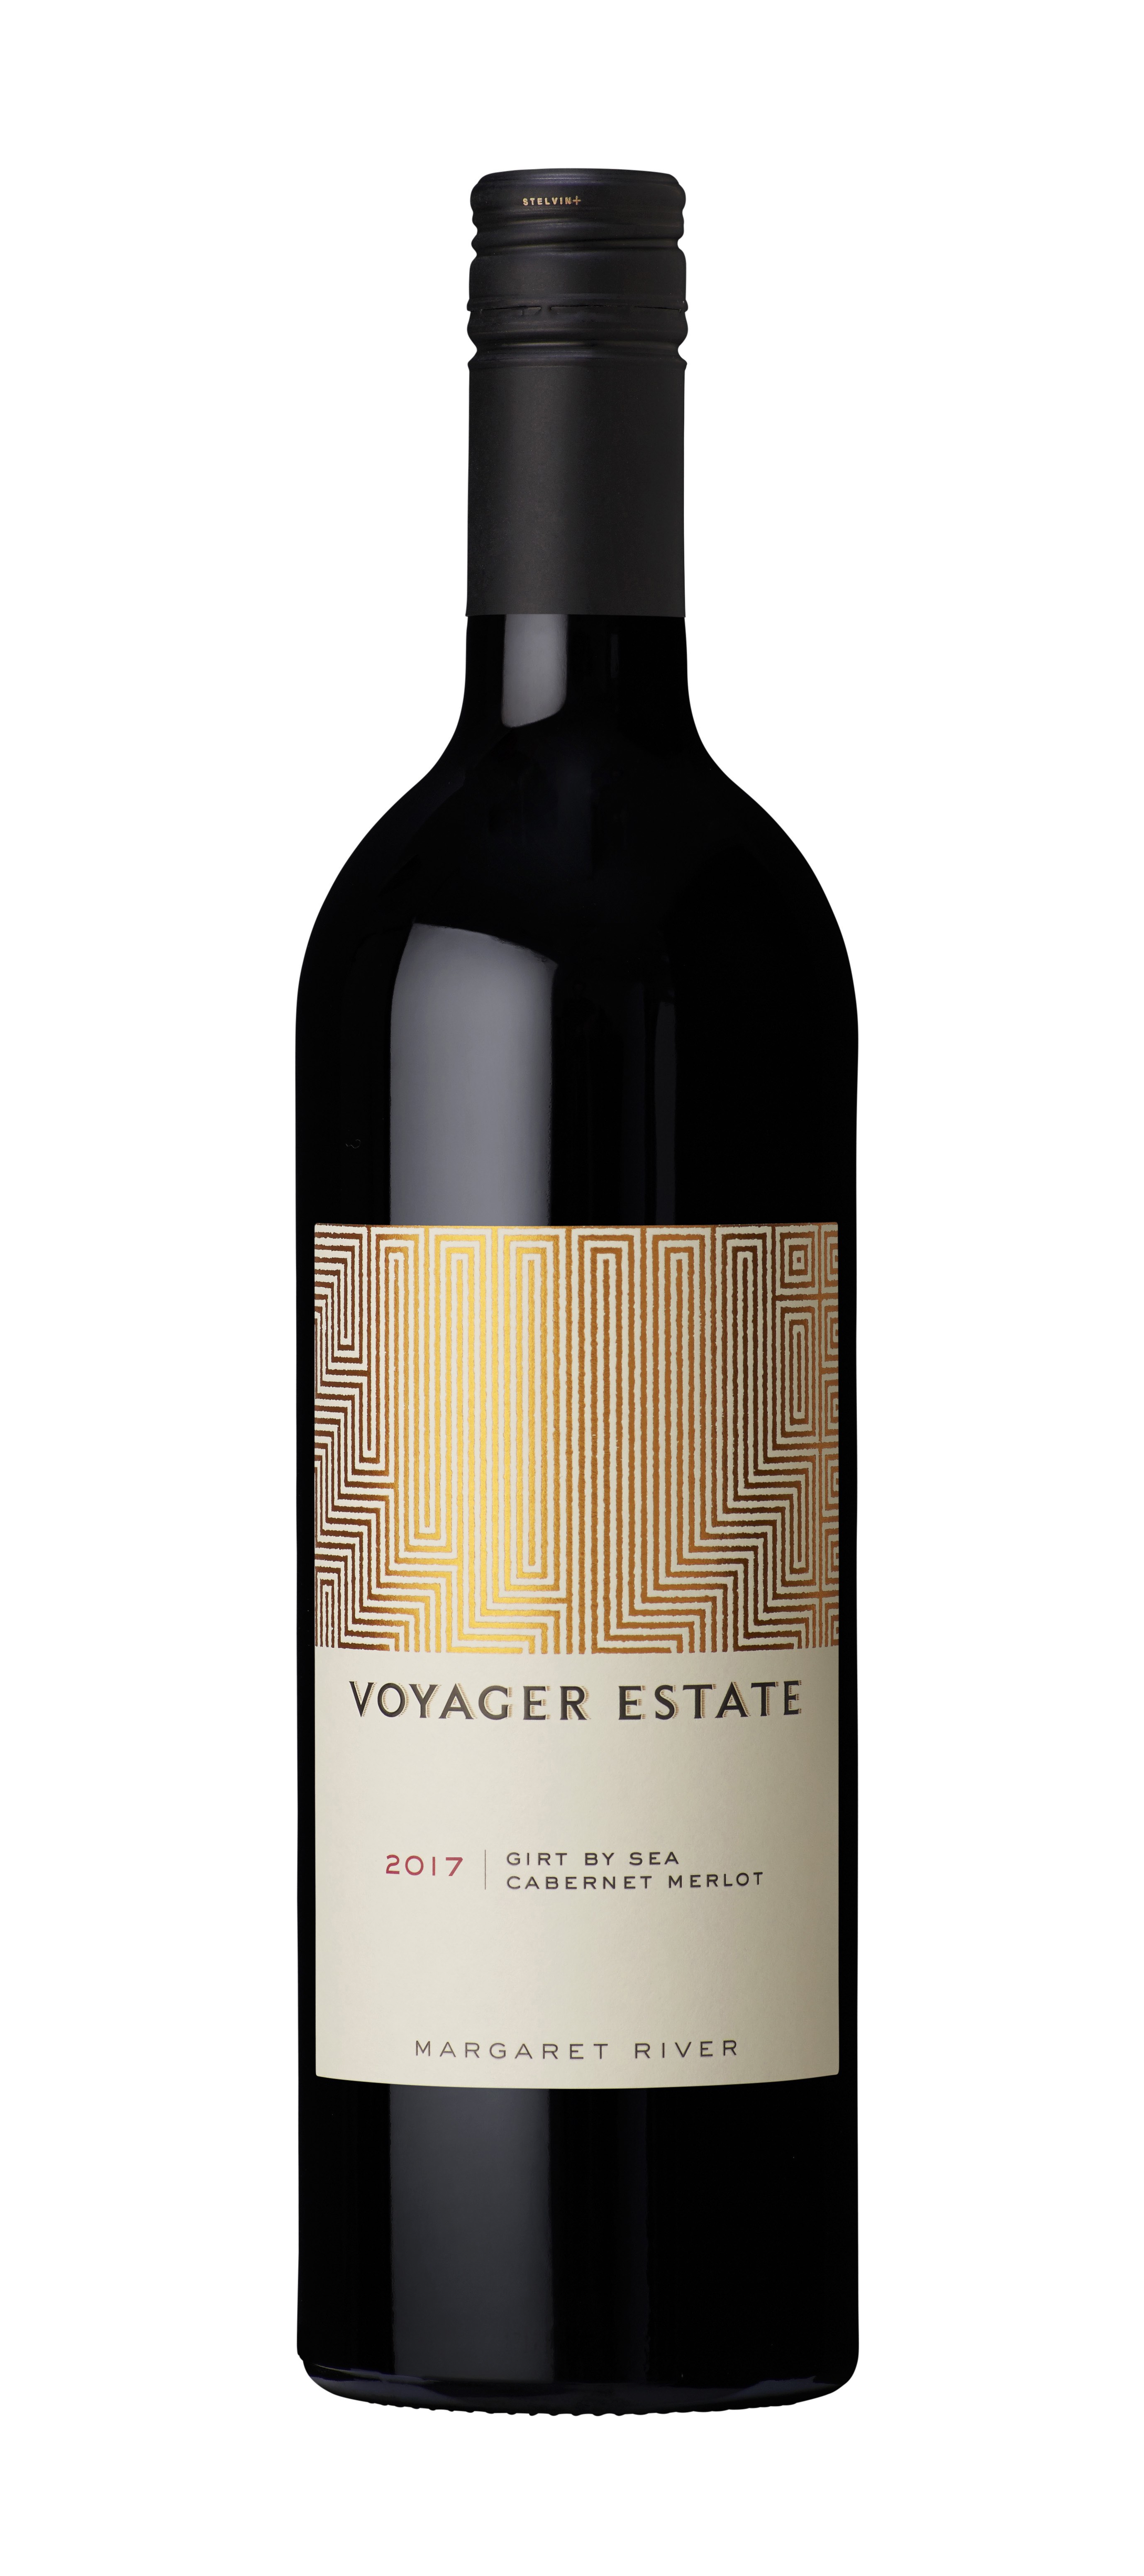 Voyager Estate Girt by Sea Goblet - Cabernet Wine 2020 Merlot